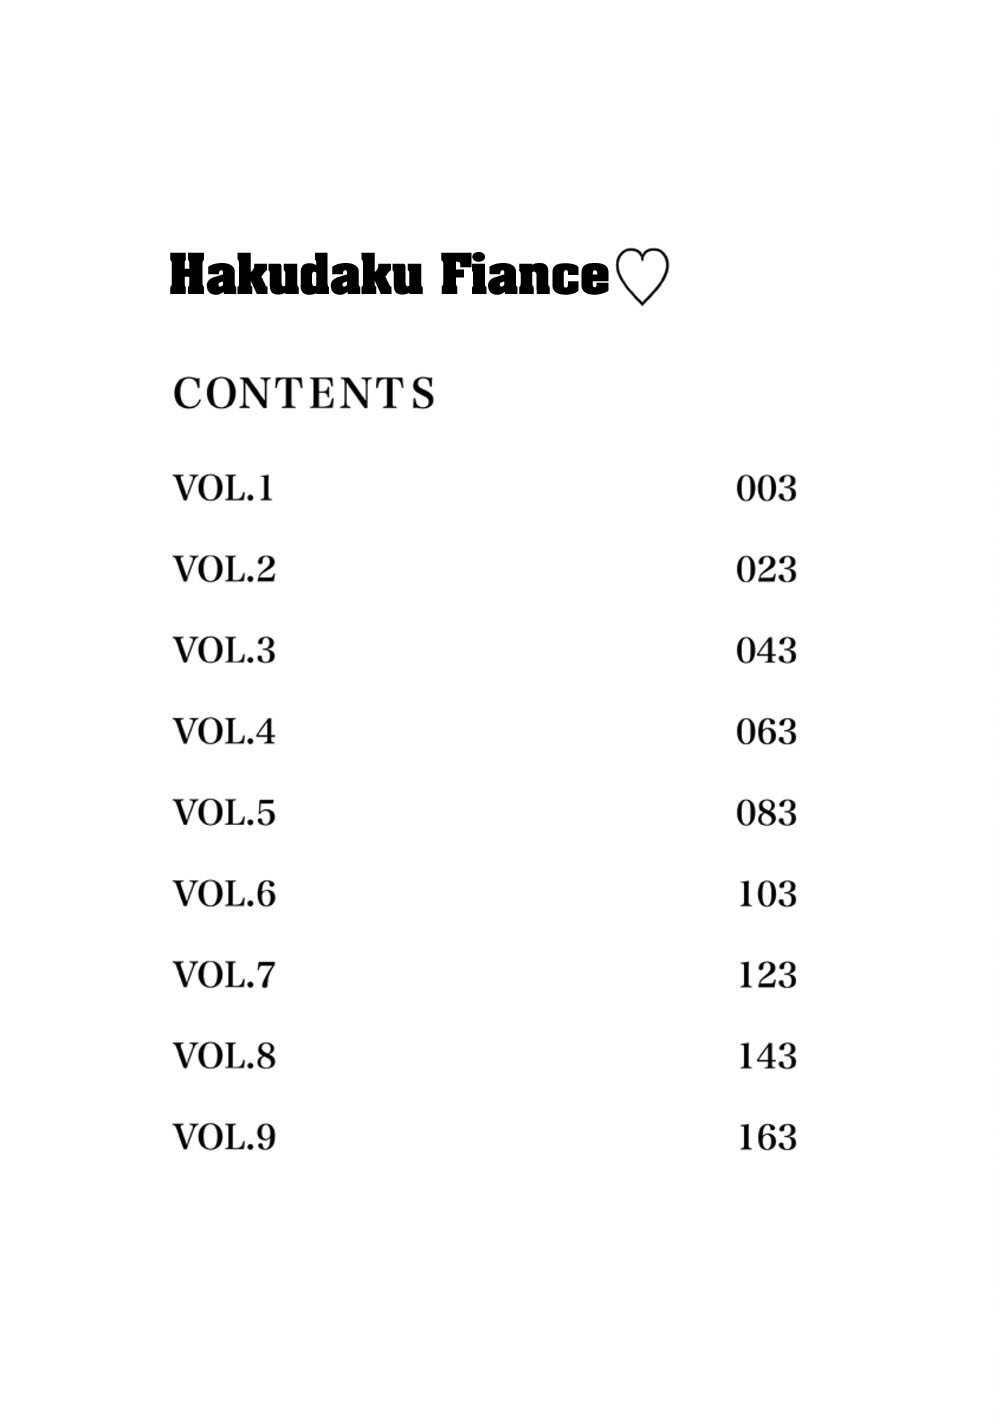 [Phantom] Hakudaku Fiance vol.1 ch 1 English 白濁フィアンセ